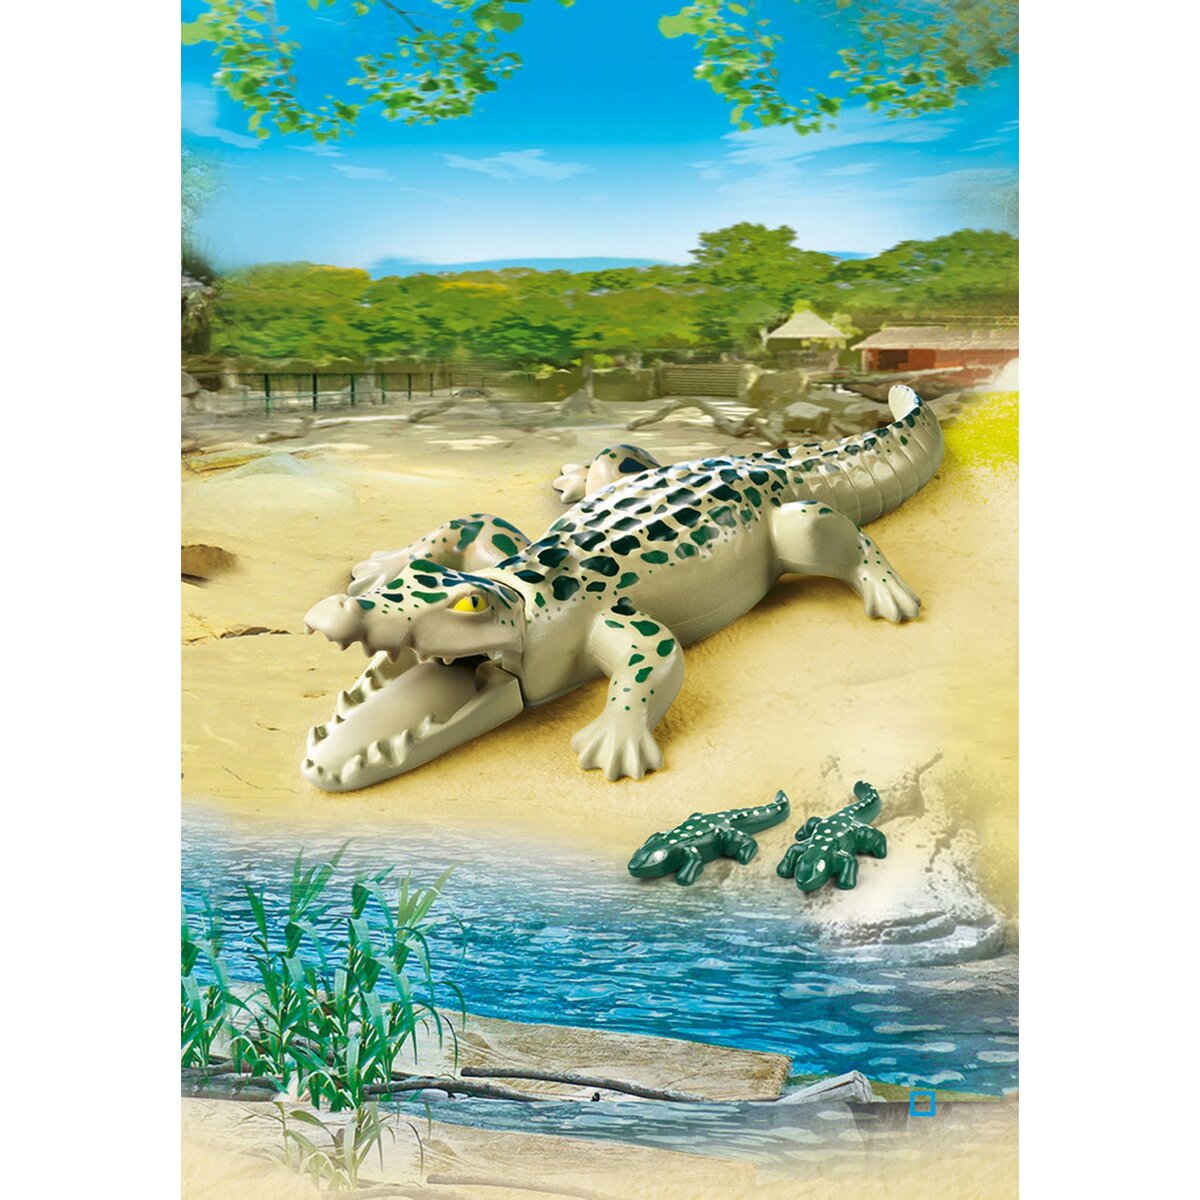 PLAYMOBIL 6644 - Alligator avec bébés